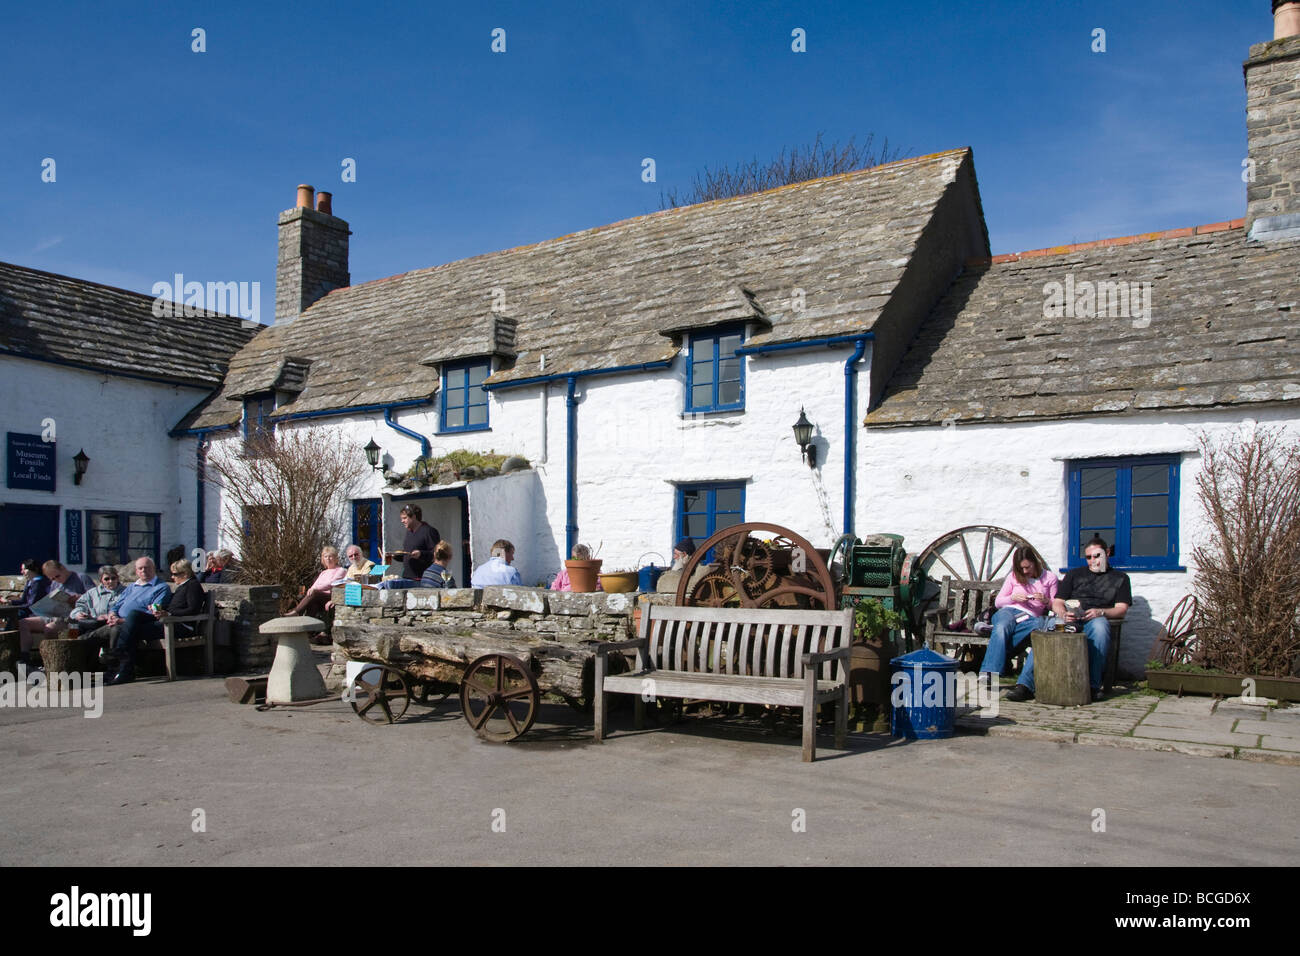 Platz & Kompass Dorfkneipe bei Wert Matravers, Dorset, Großbritannien Stockfoto